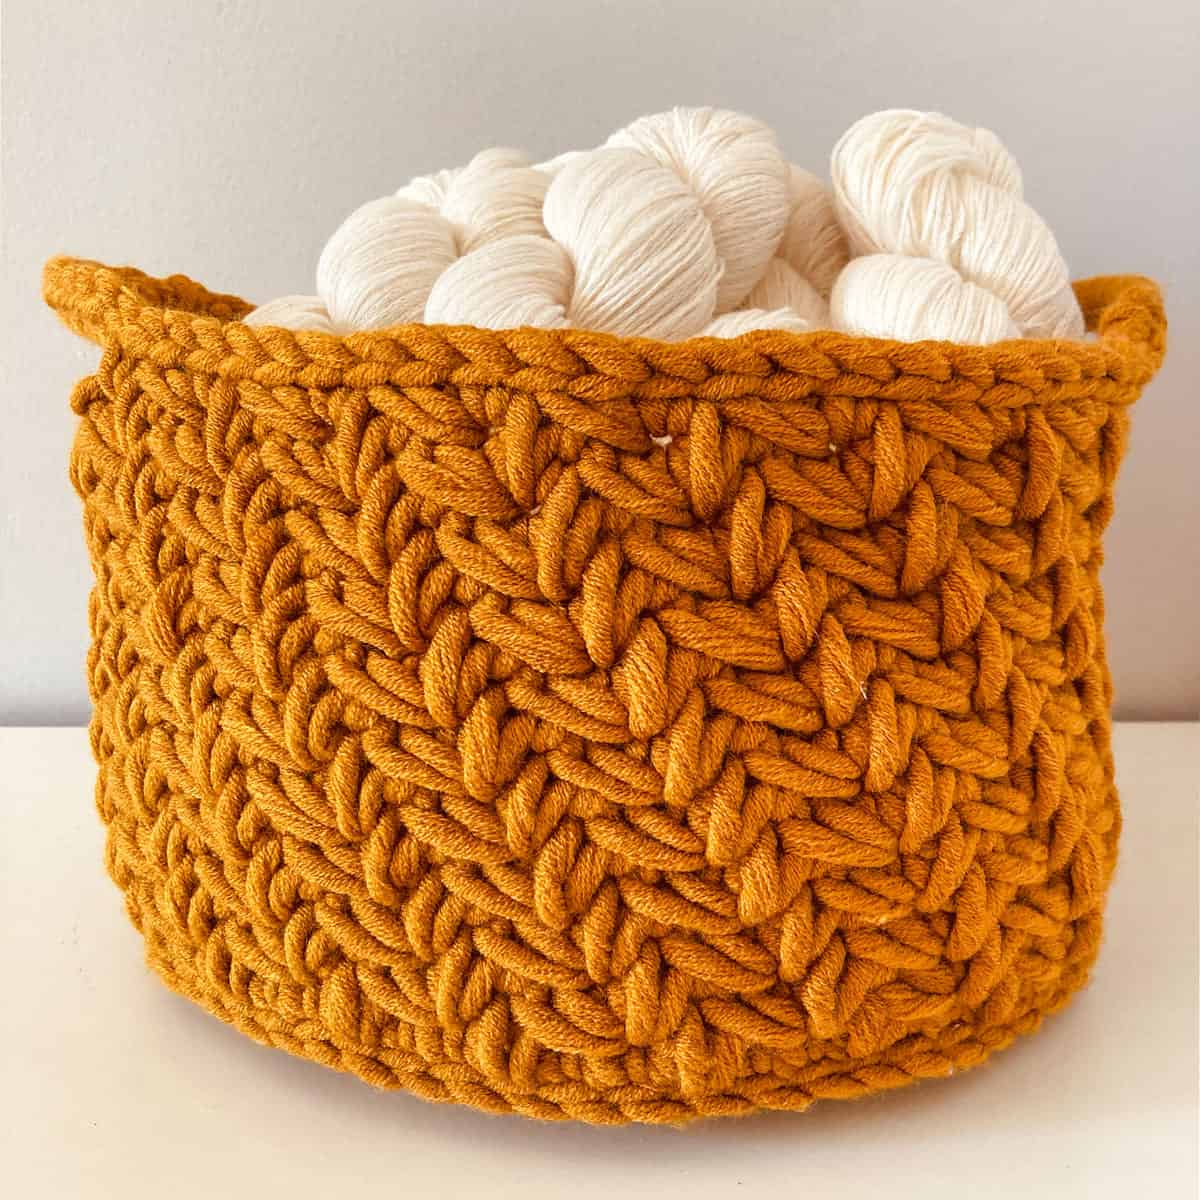 Crocheting Fun Floppy Homemade Baskets